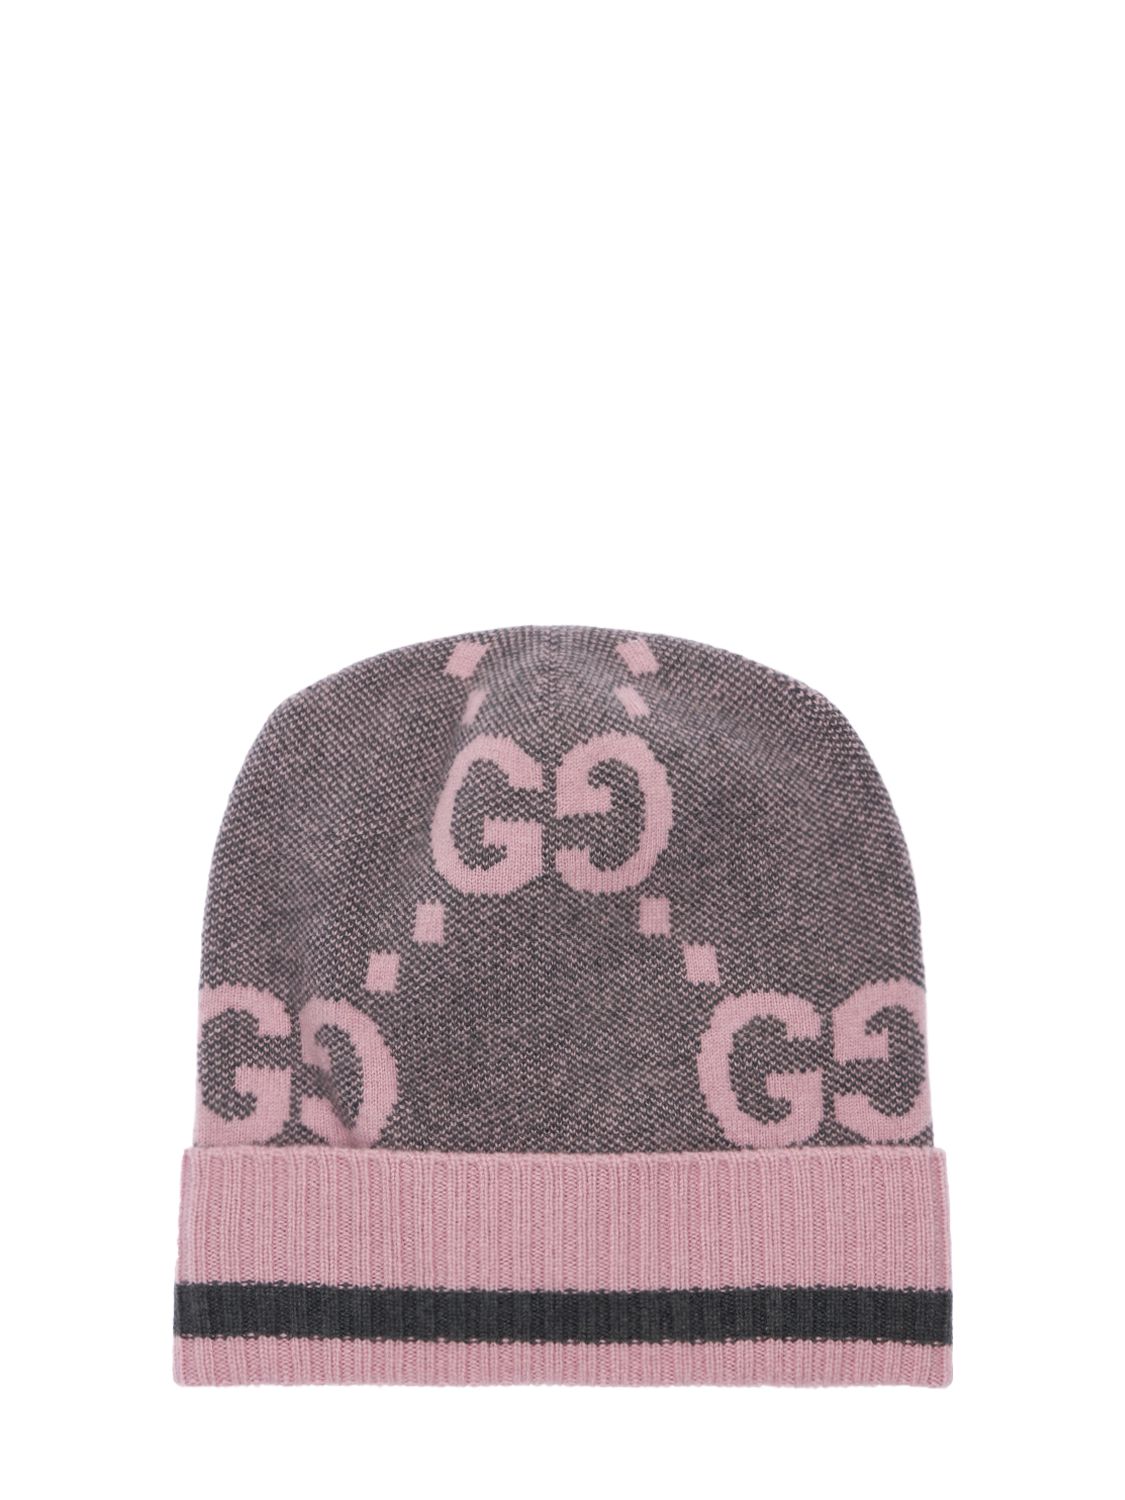 Gg Motif Cashmere Knit Hat